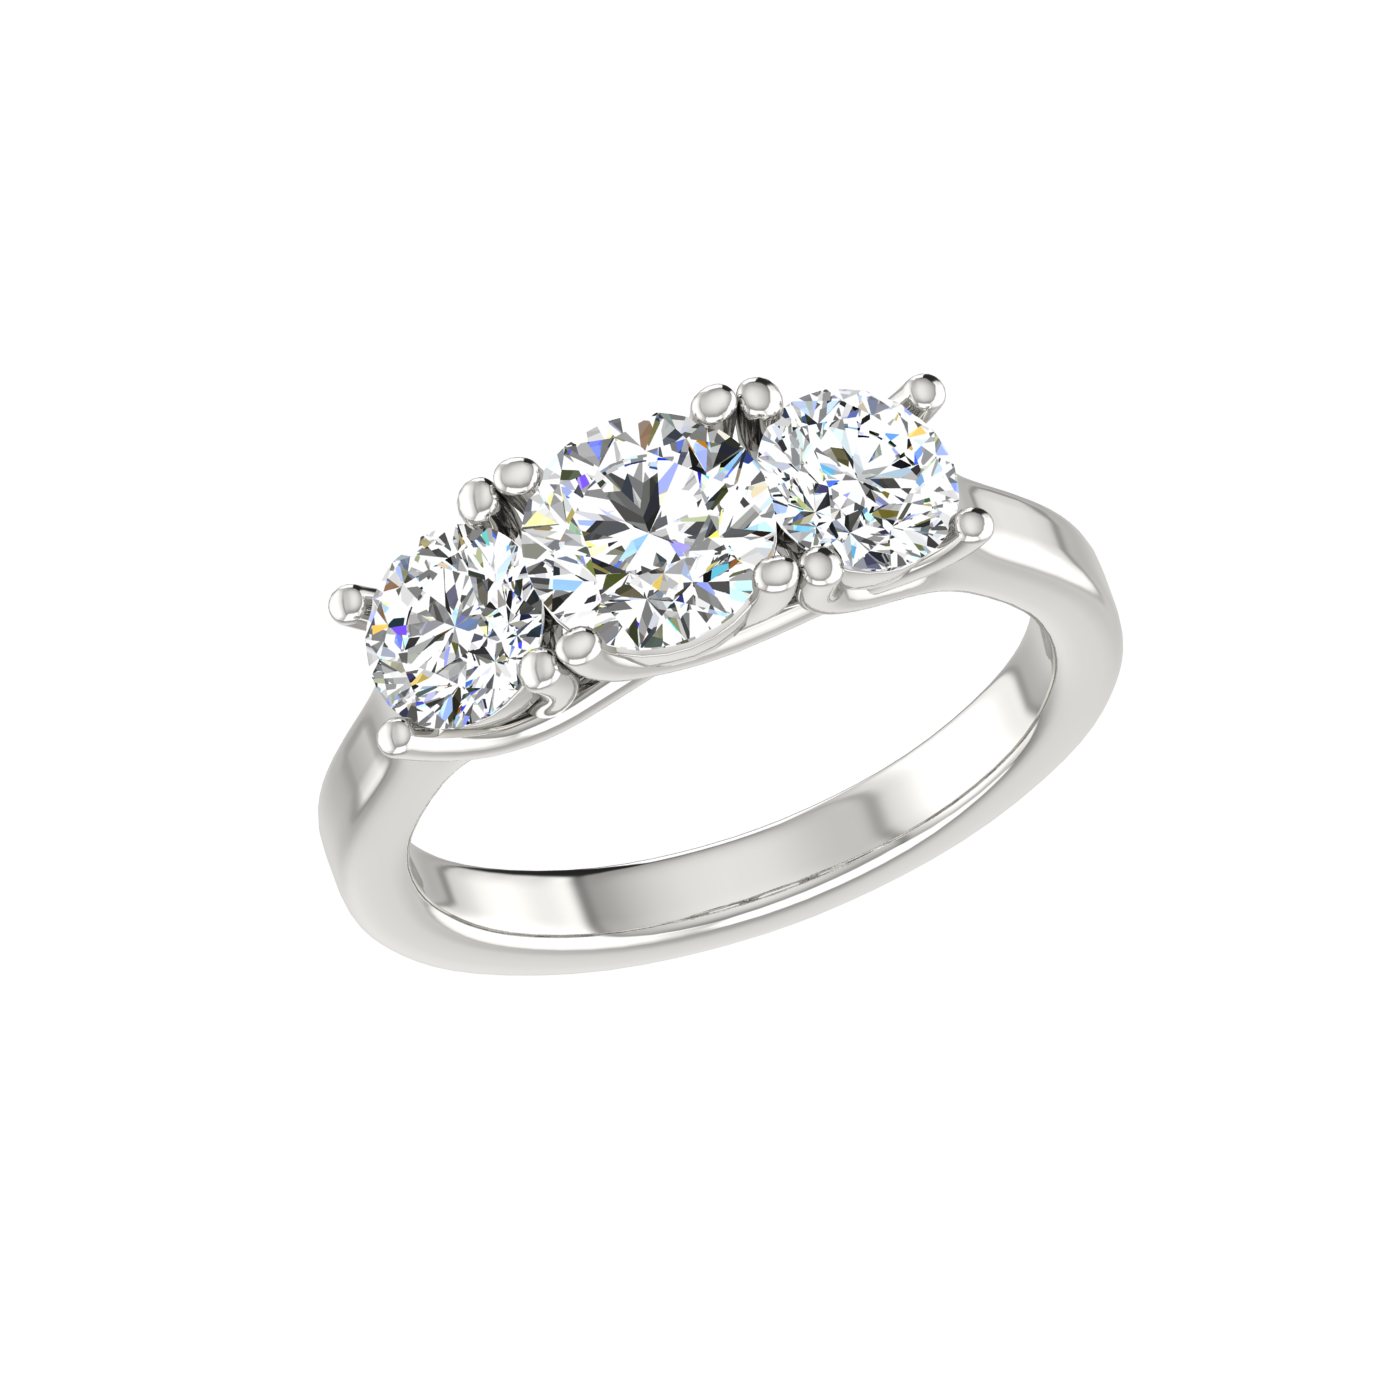 Terzetto Three-Stone Diamond Ring | Shane Co.